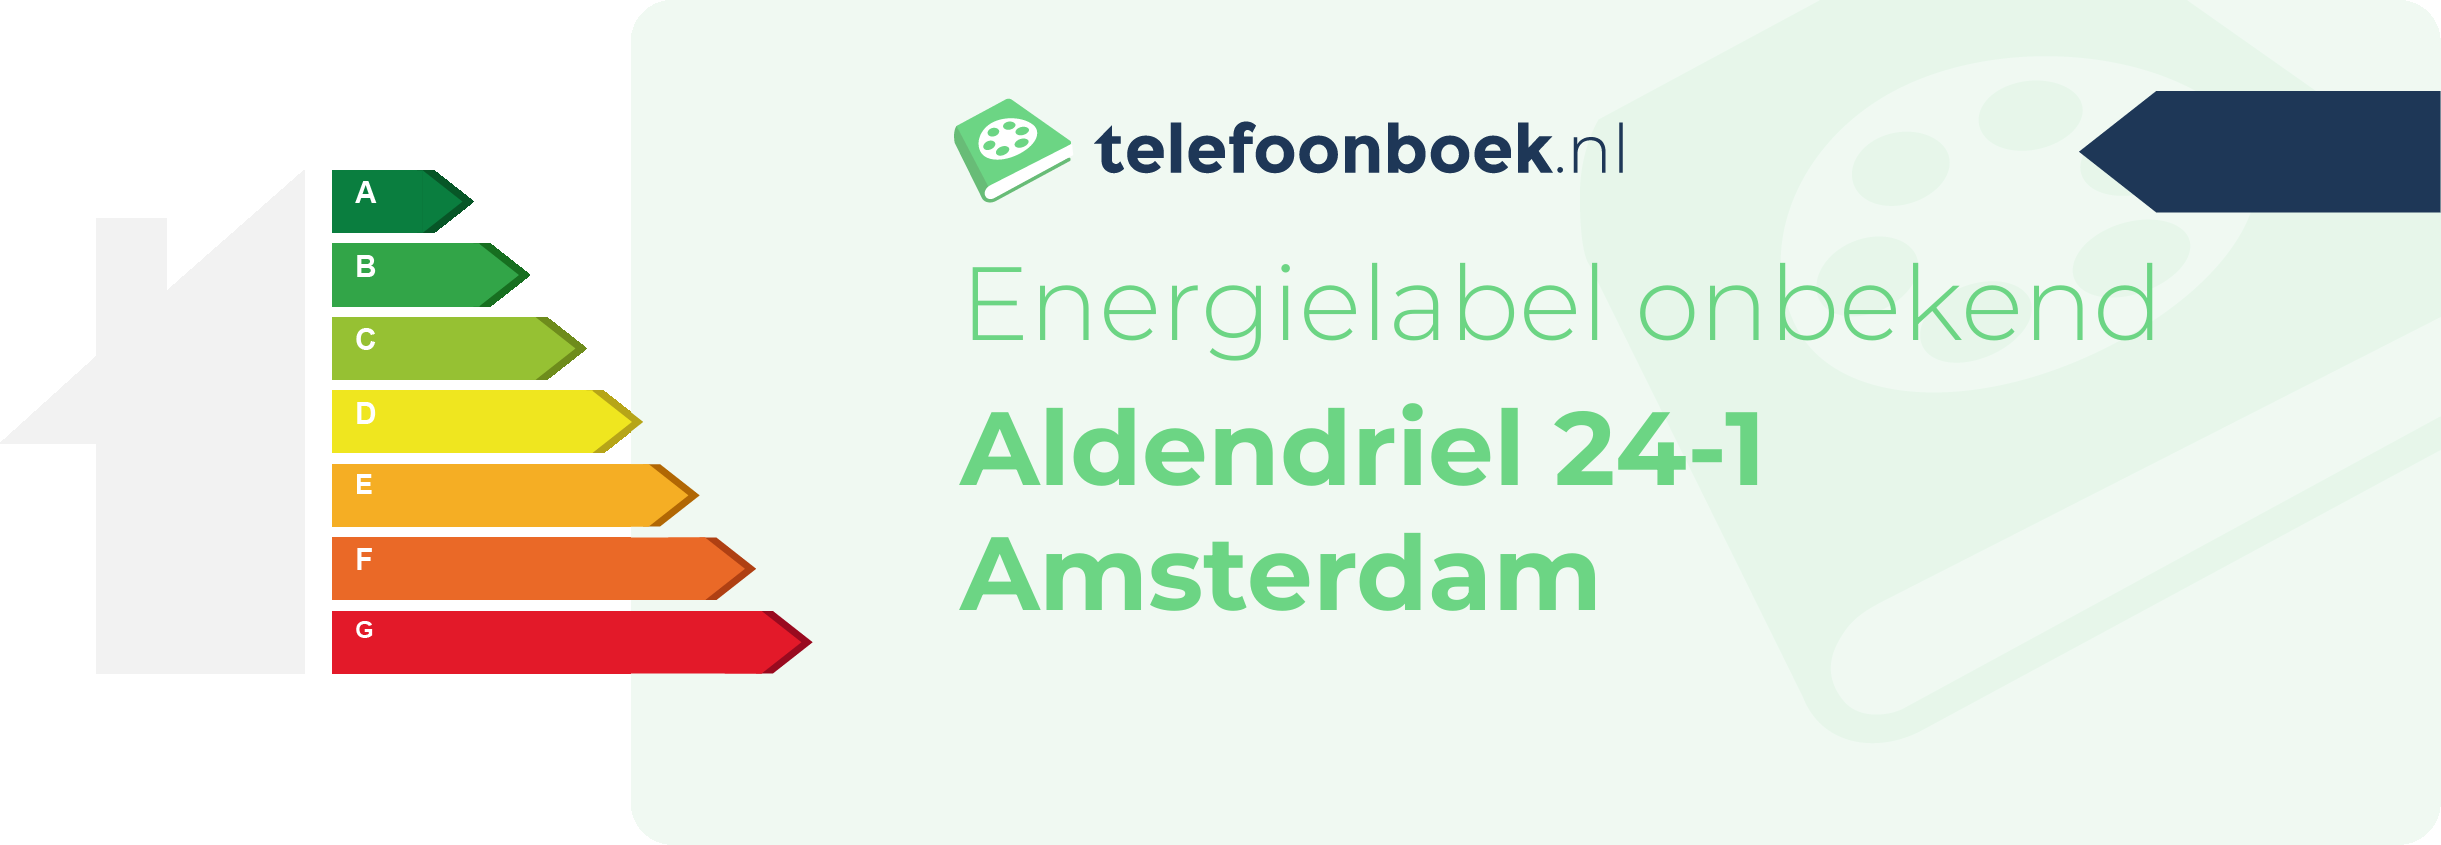 Energielabel Aldendriel 24-1 Amsterdam